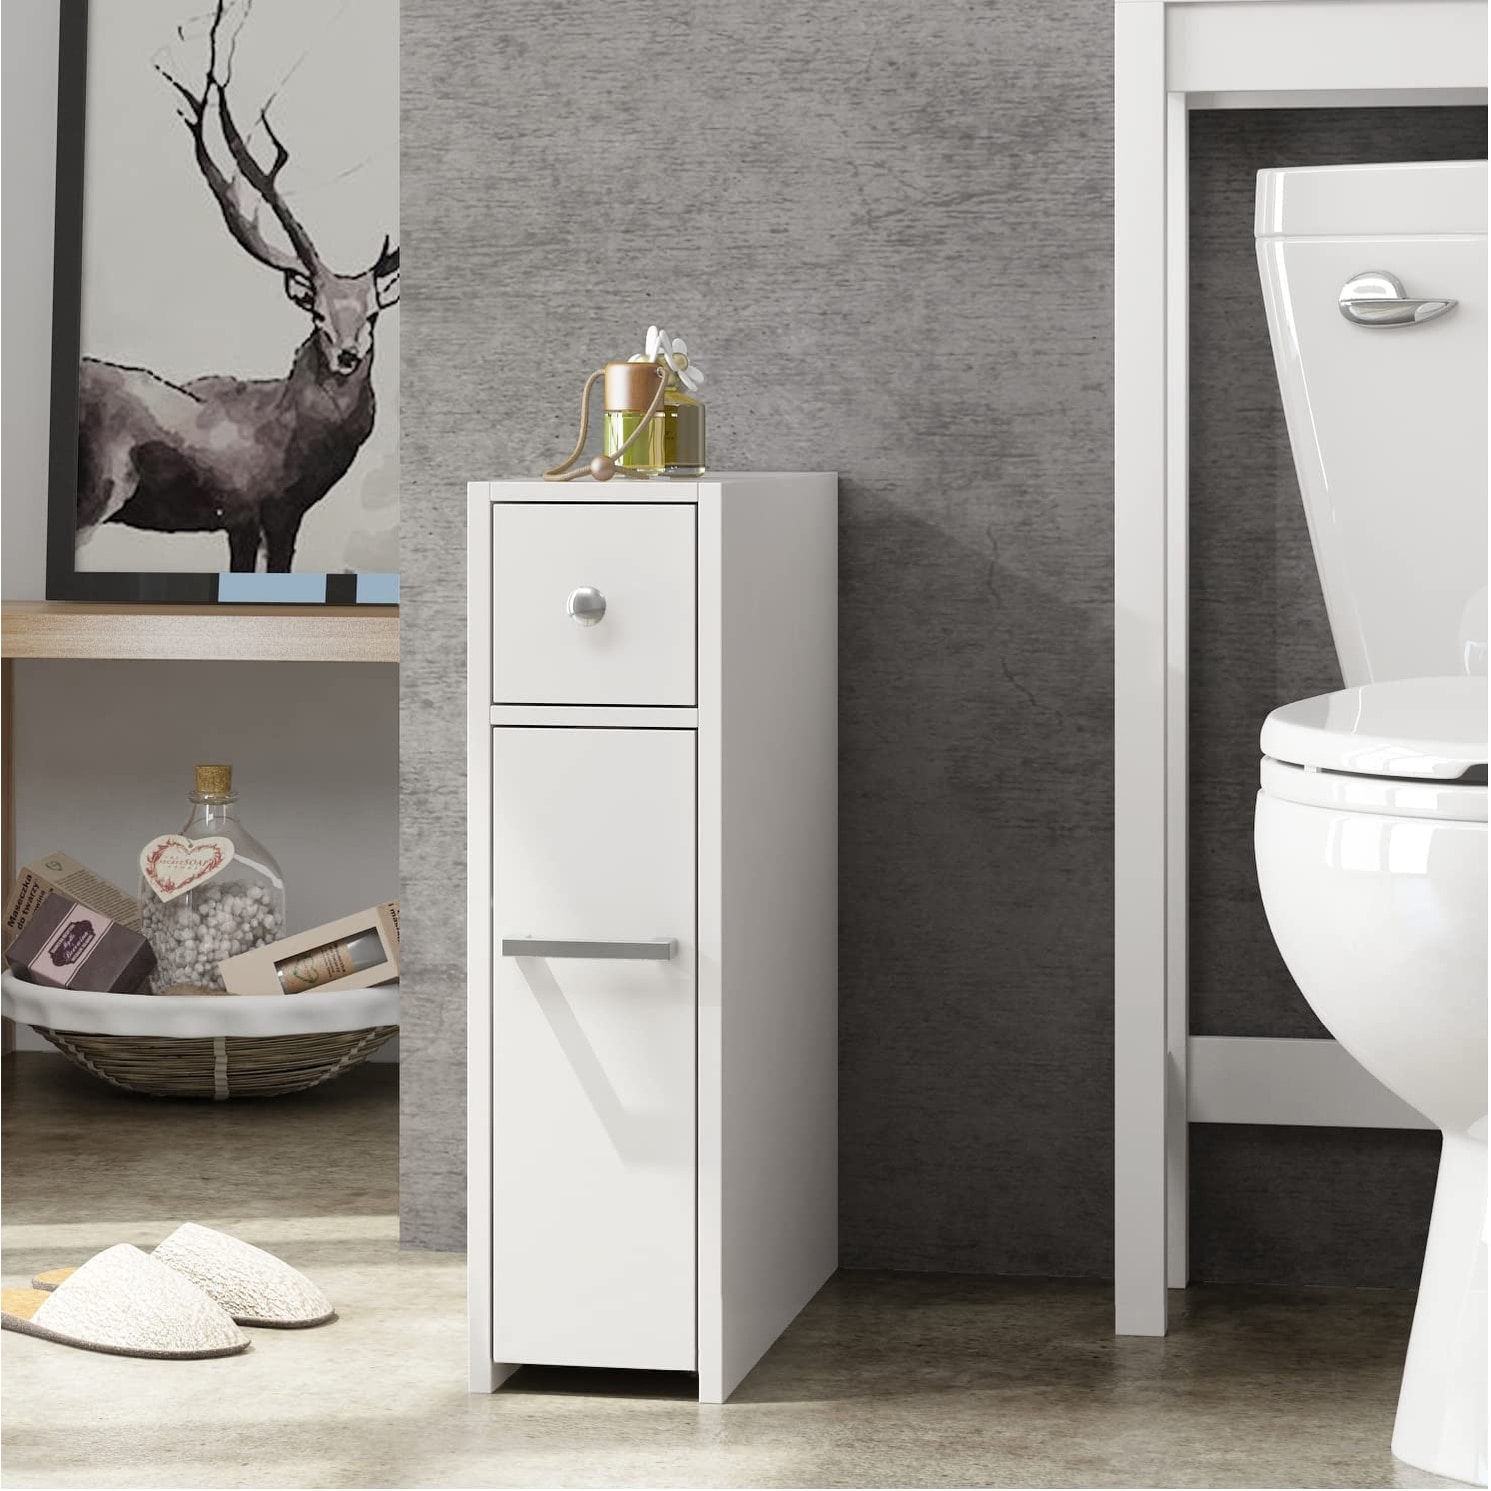 https://ak1.ostkcdn.com/images/products/is/images/direct/6ab963aff95f08d707891e3025930fb6770c9364/Spirich-Home-Slim-Bathroom-Storage-Cabinet%2C-Free-Standing-Toilet-Paper-Holder%2C-Bathroom-Cabinet-Slide-Out-Drawer-Storage.jpg